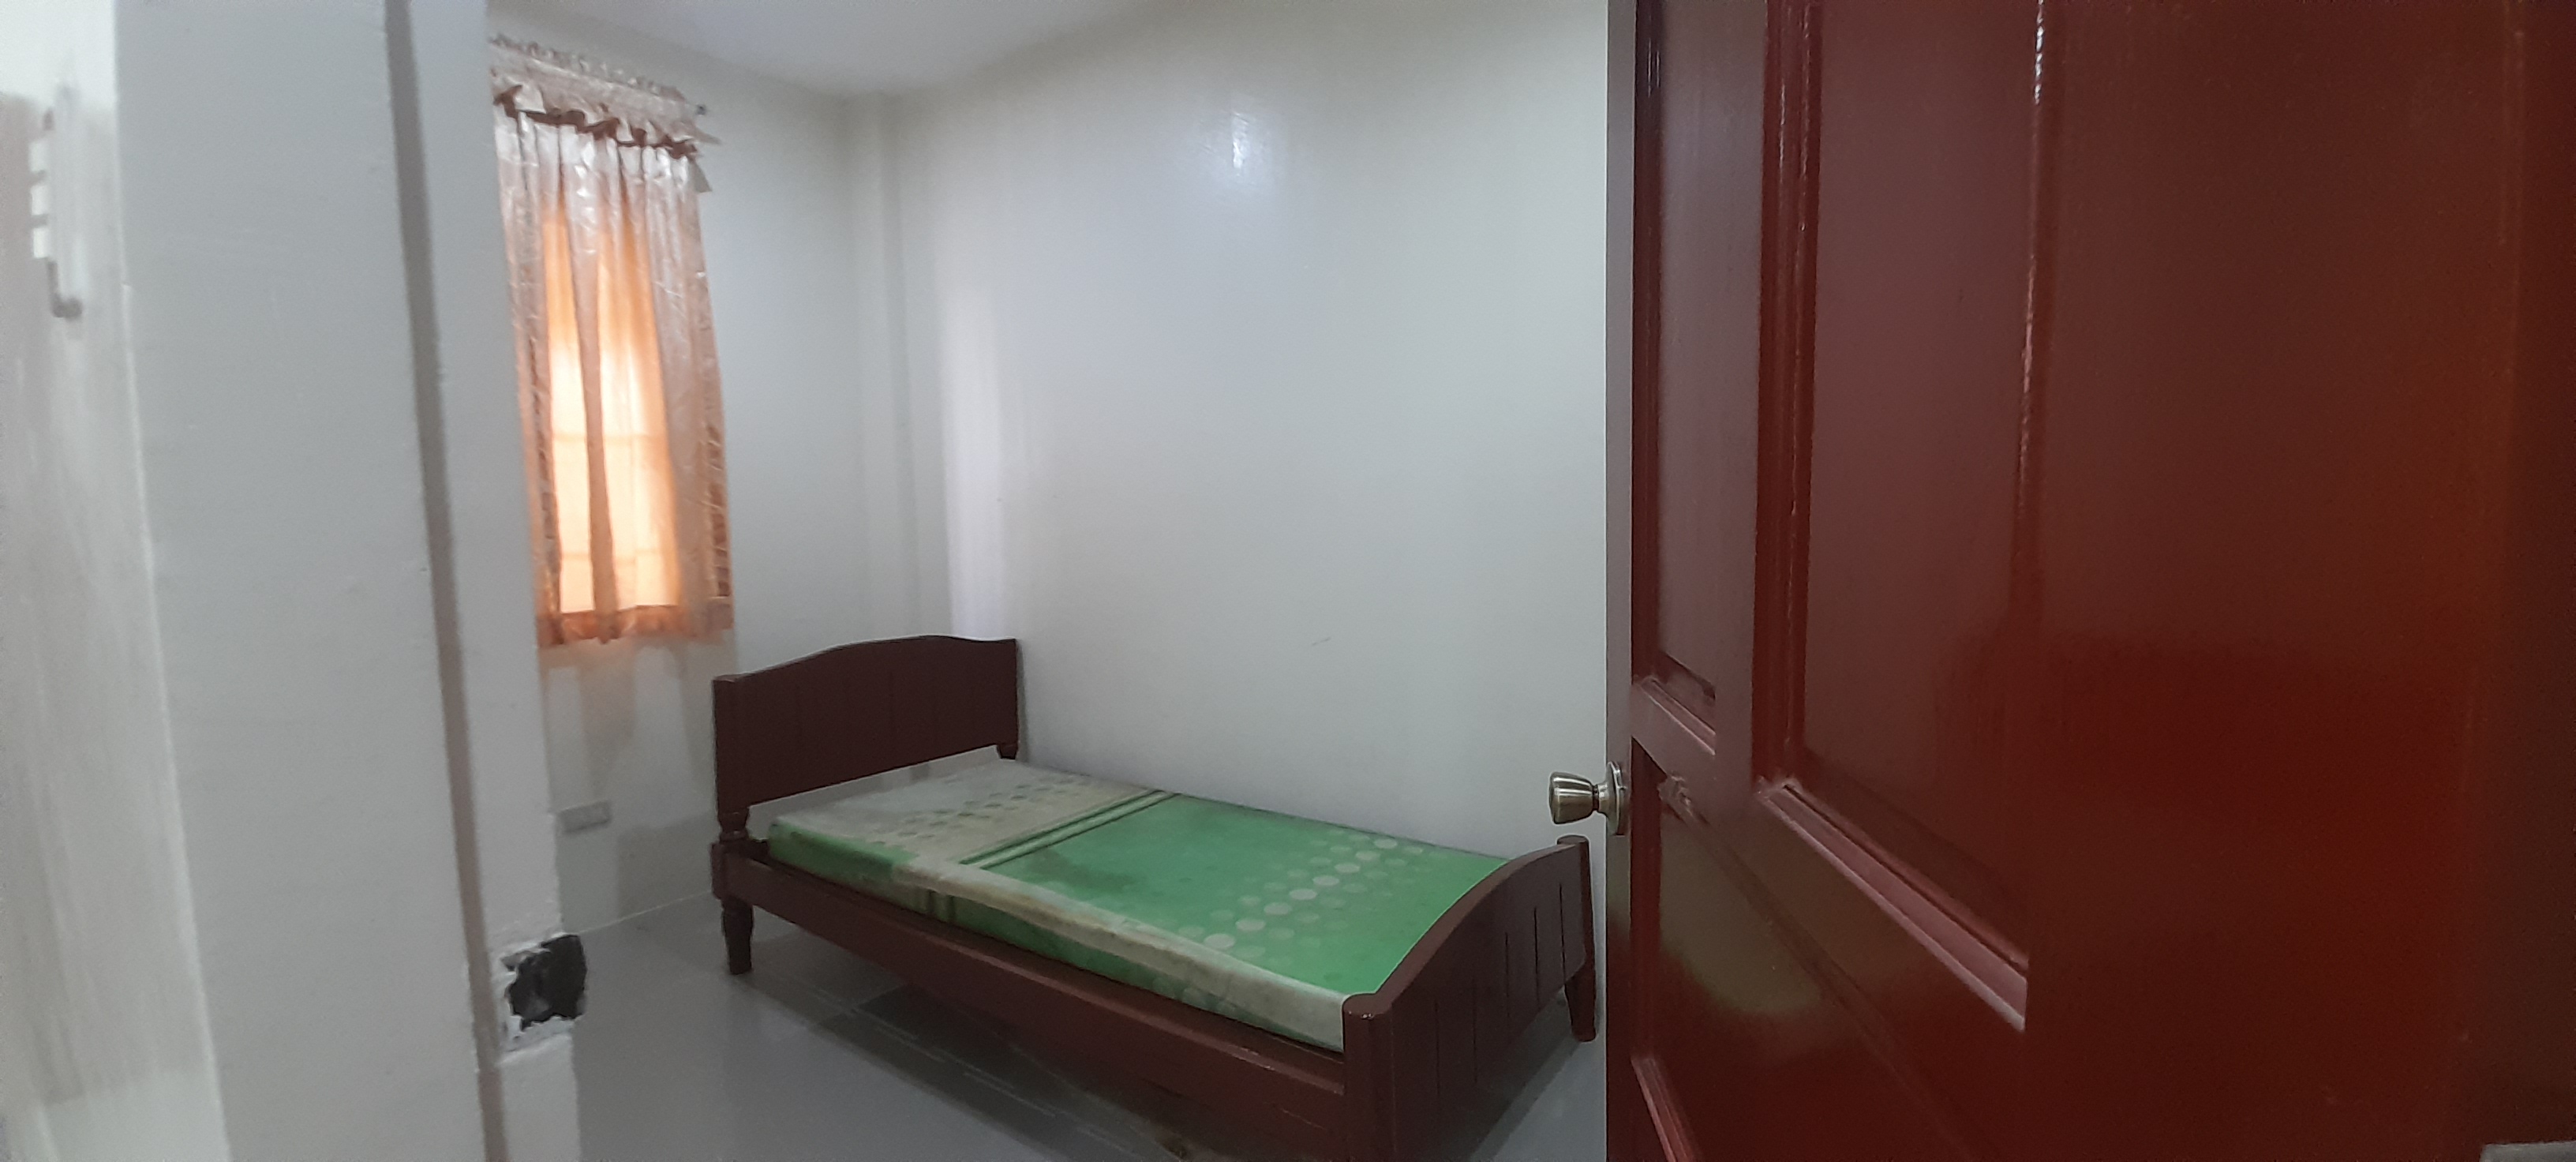 4-bedroom-and-semi-furnished-house-in-talamban-cebu-city